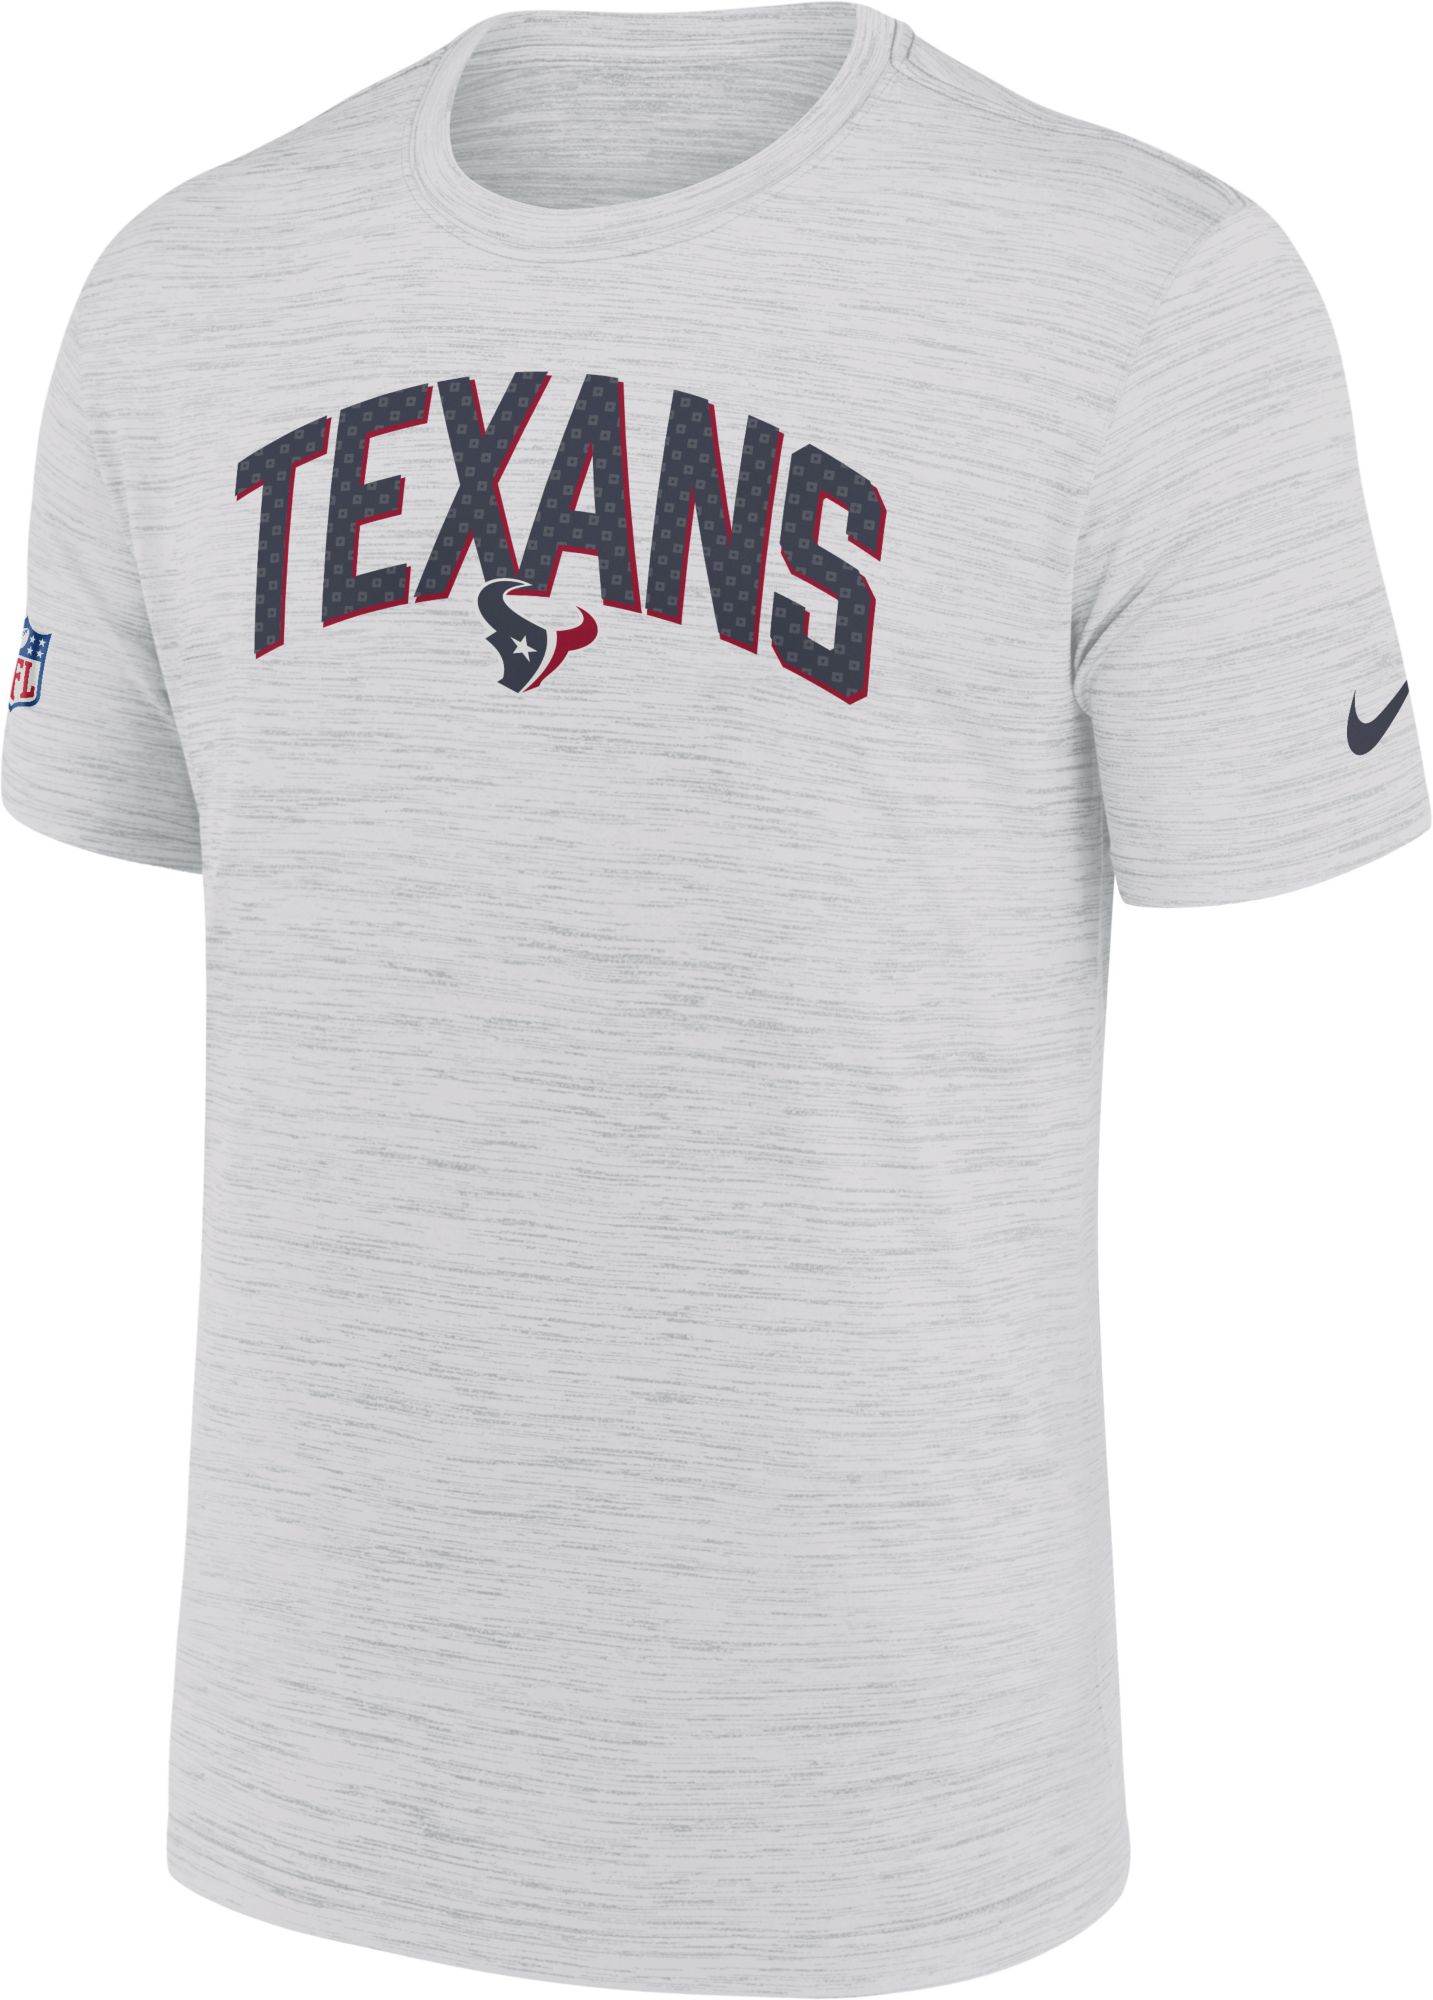 Nike Men's Arizona Diamondbacks Red Legend Game T-Shirt